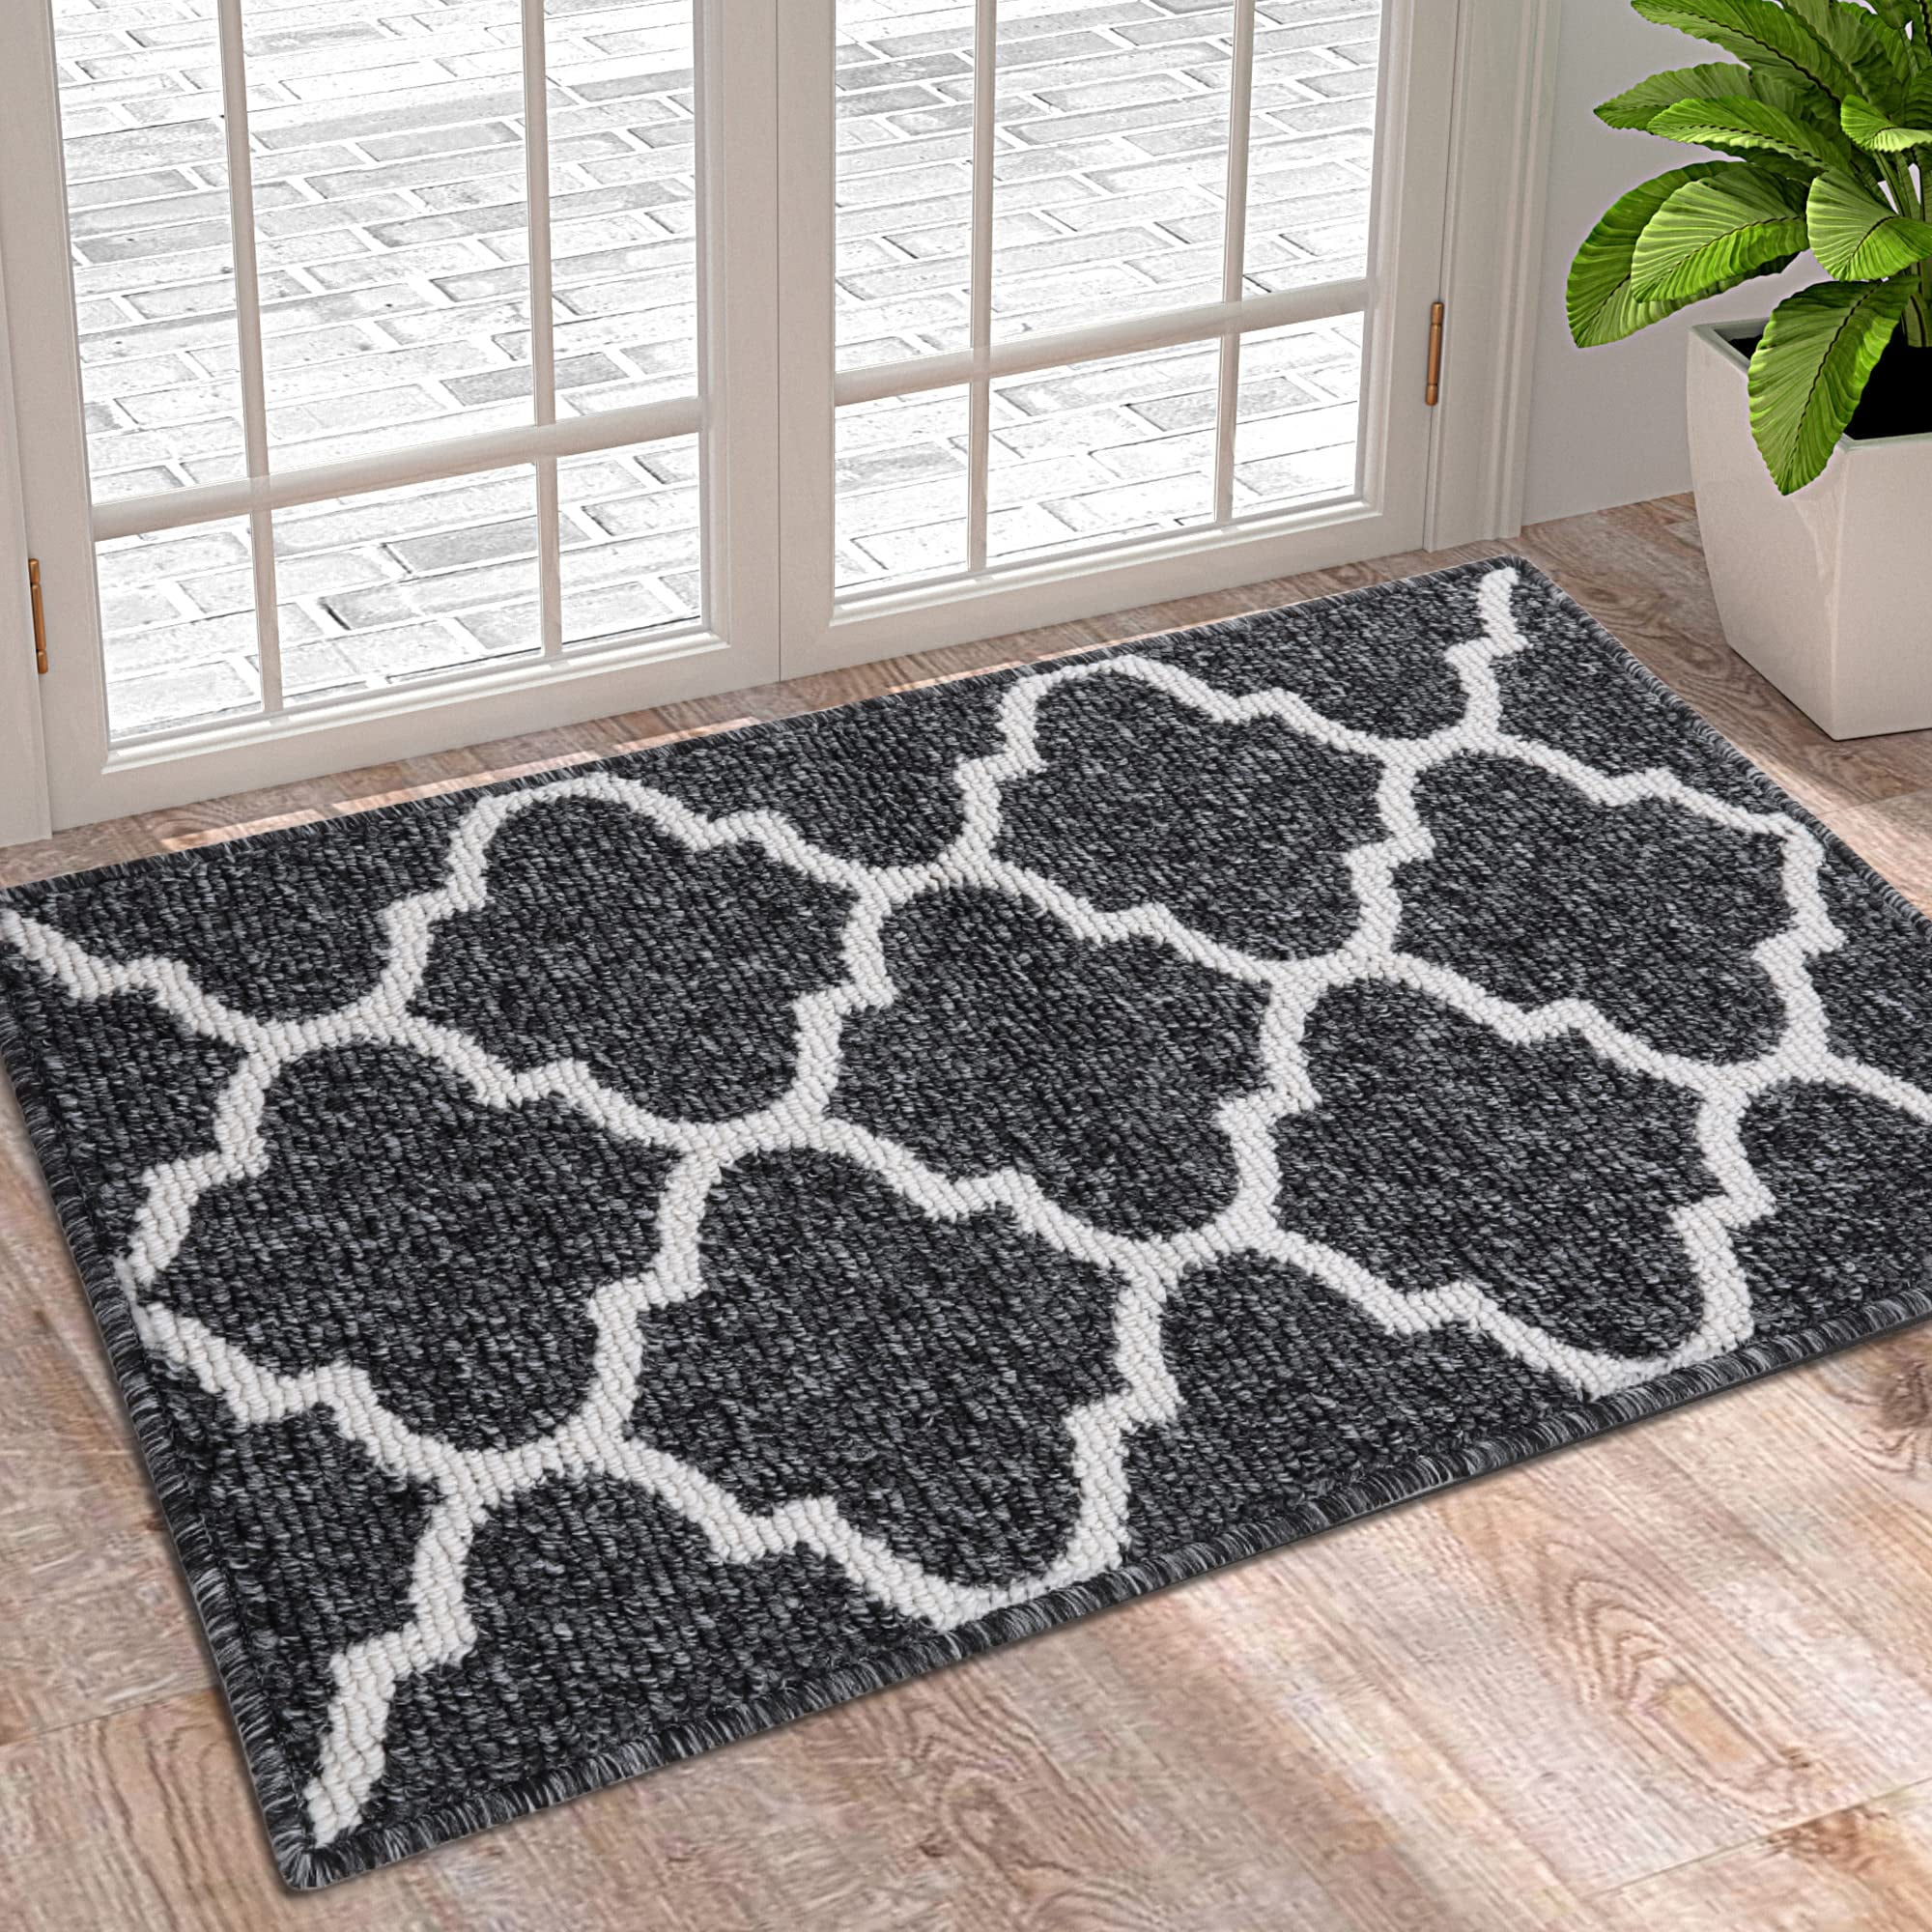 Carvapet 2 Piece Non-Slip Kitchen Mat TP-Rubber Backing Doormat Bathroom Rug Set 